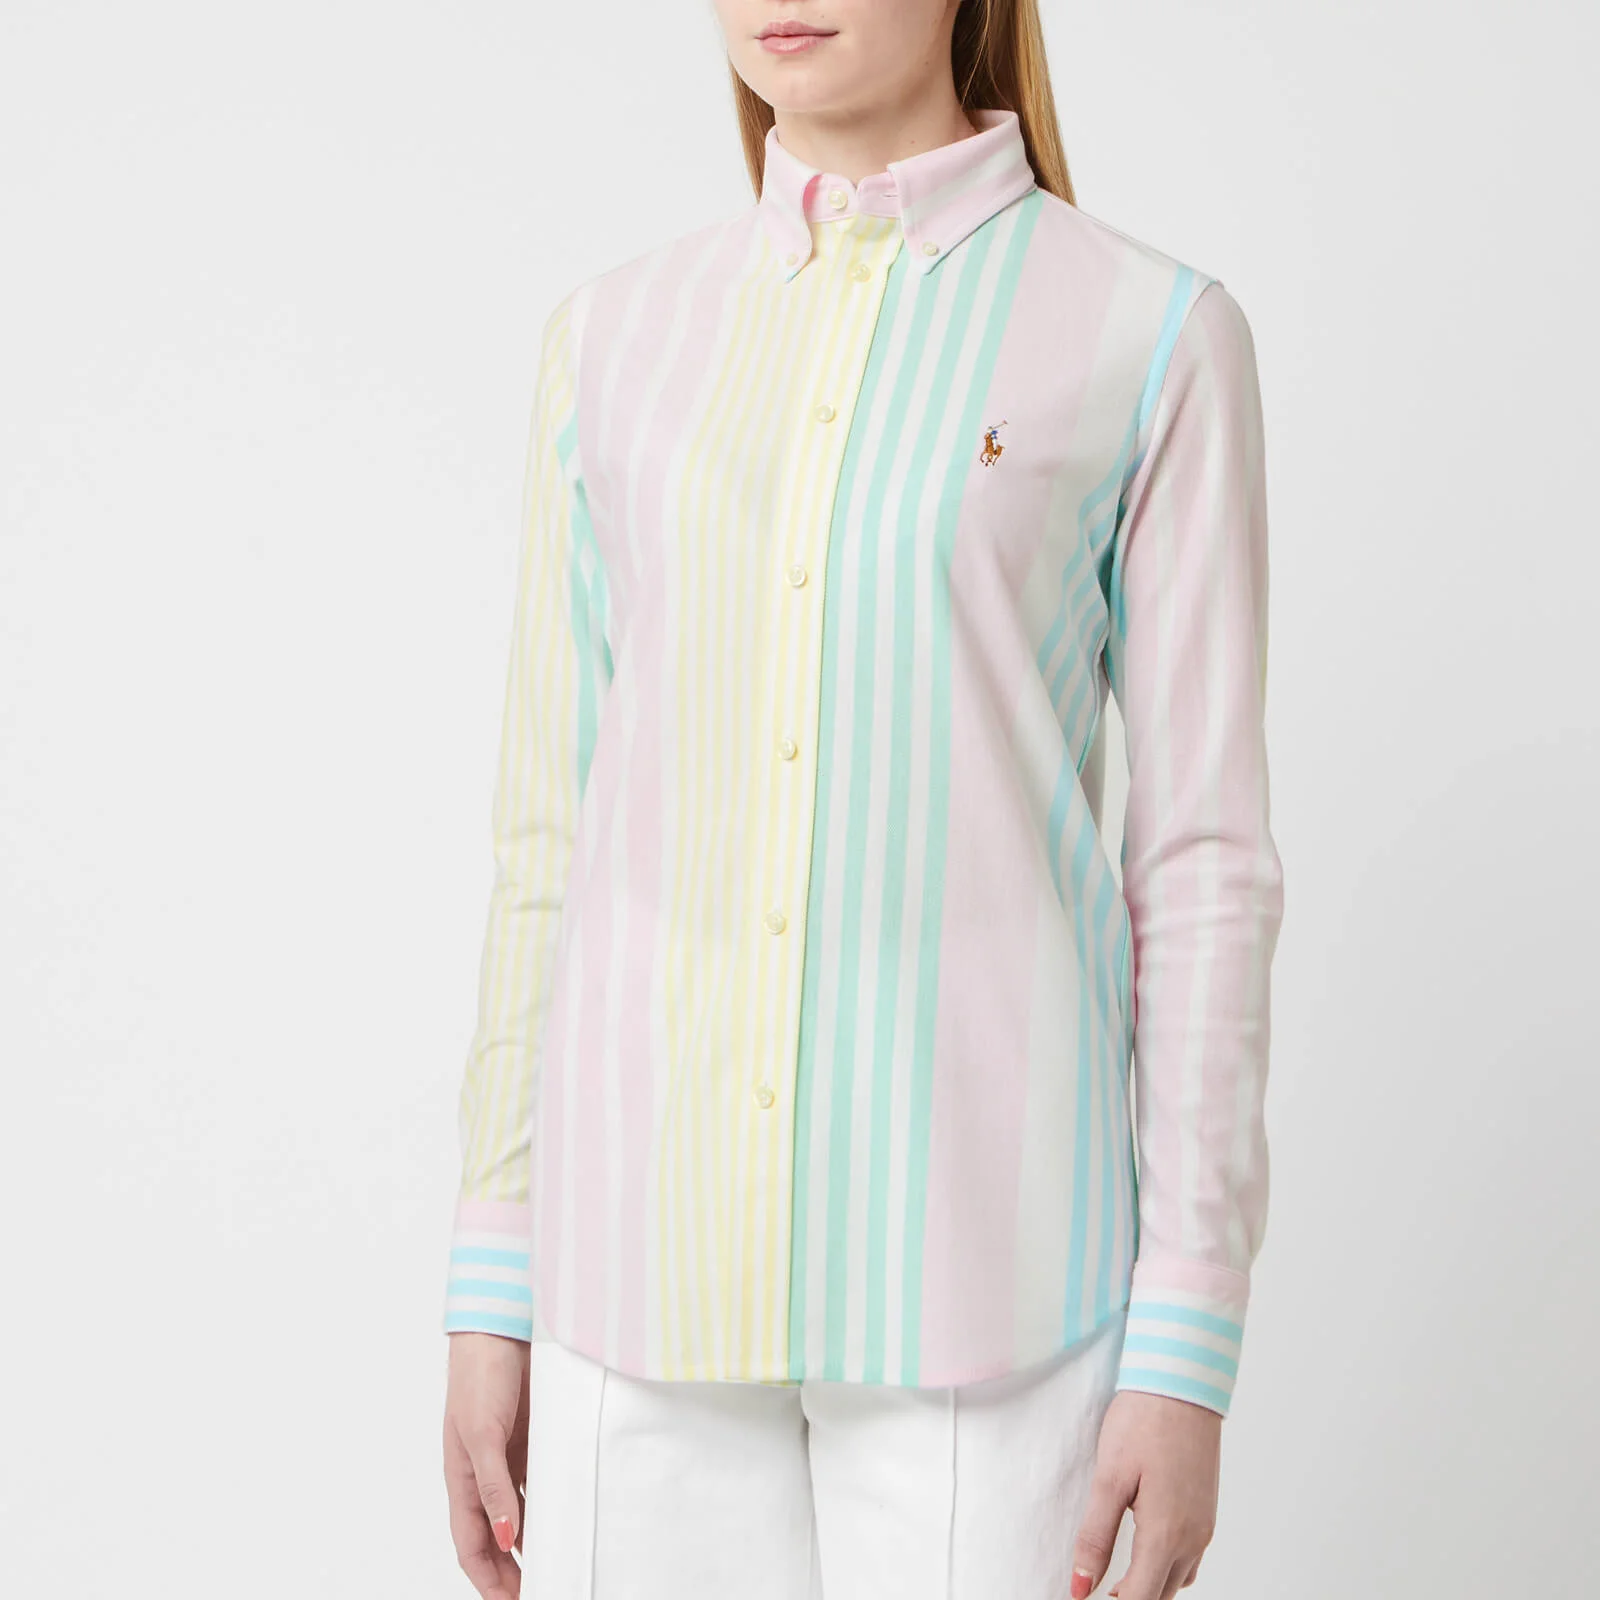 Polo Ralph Lauren Women's Striped Heidi Shirt - Multi Stripe Image 1